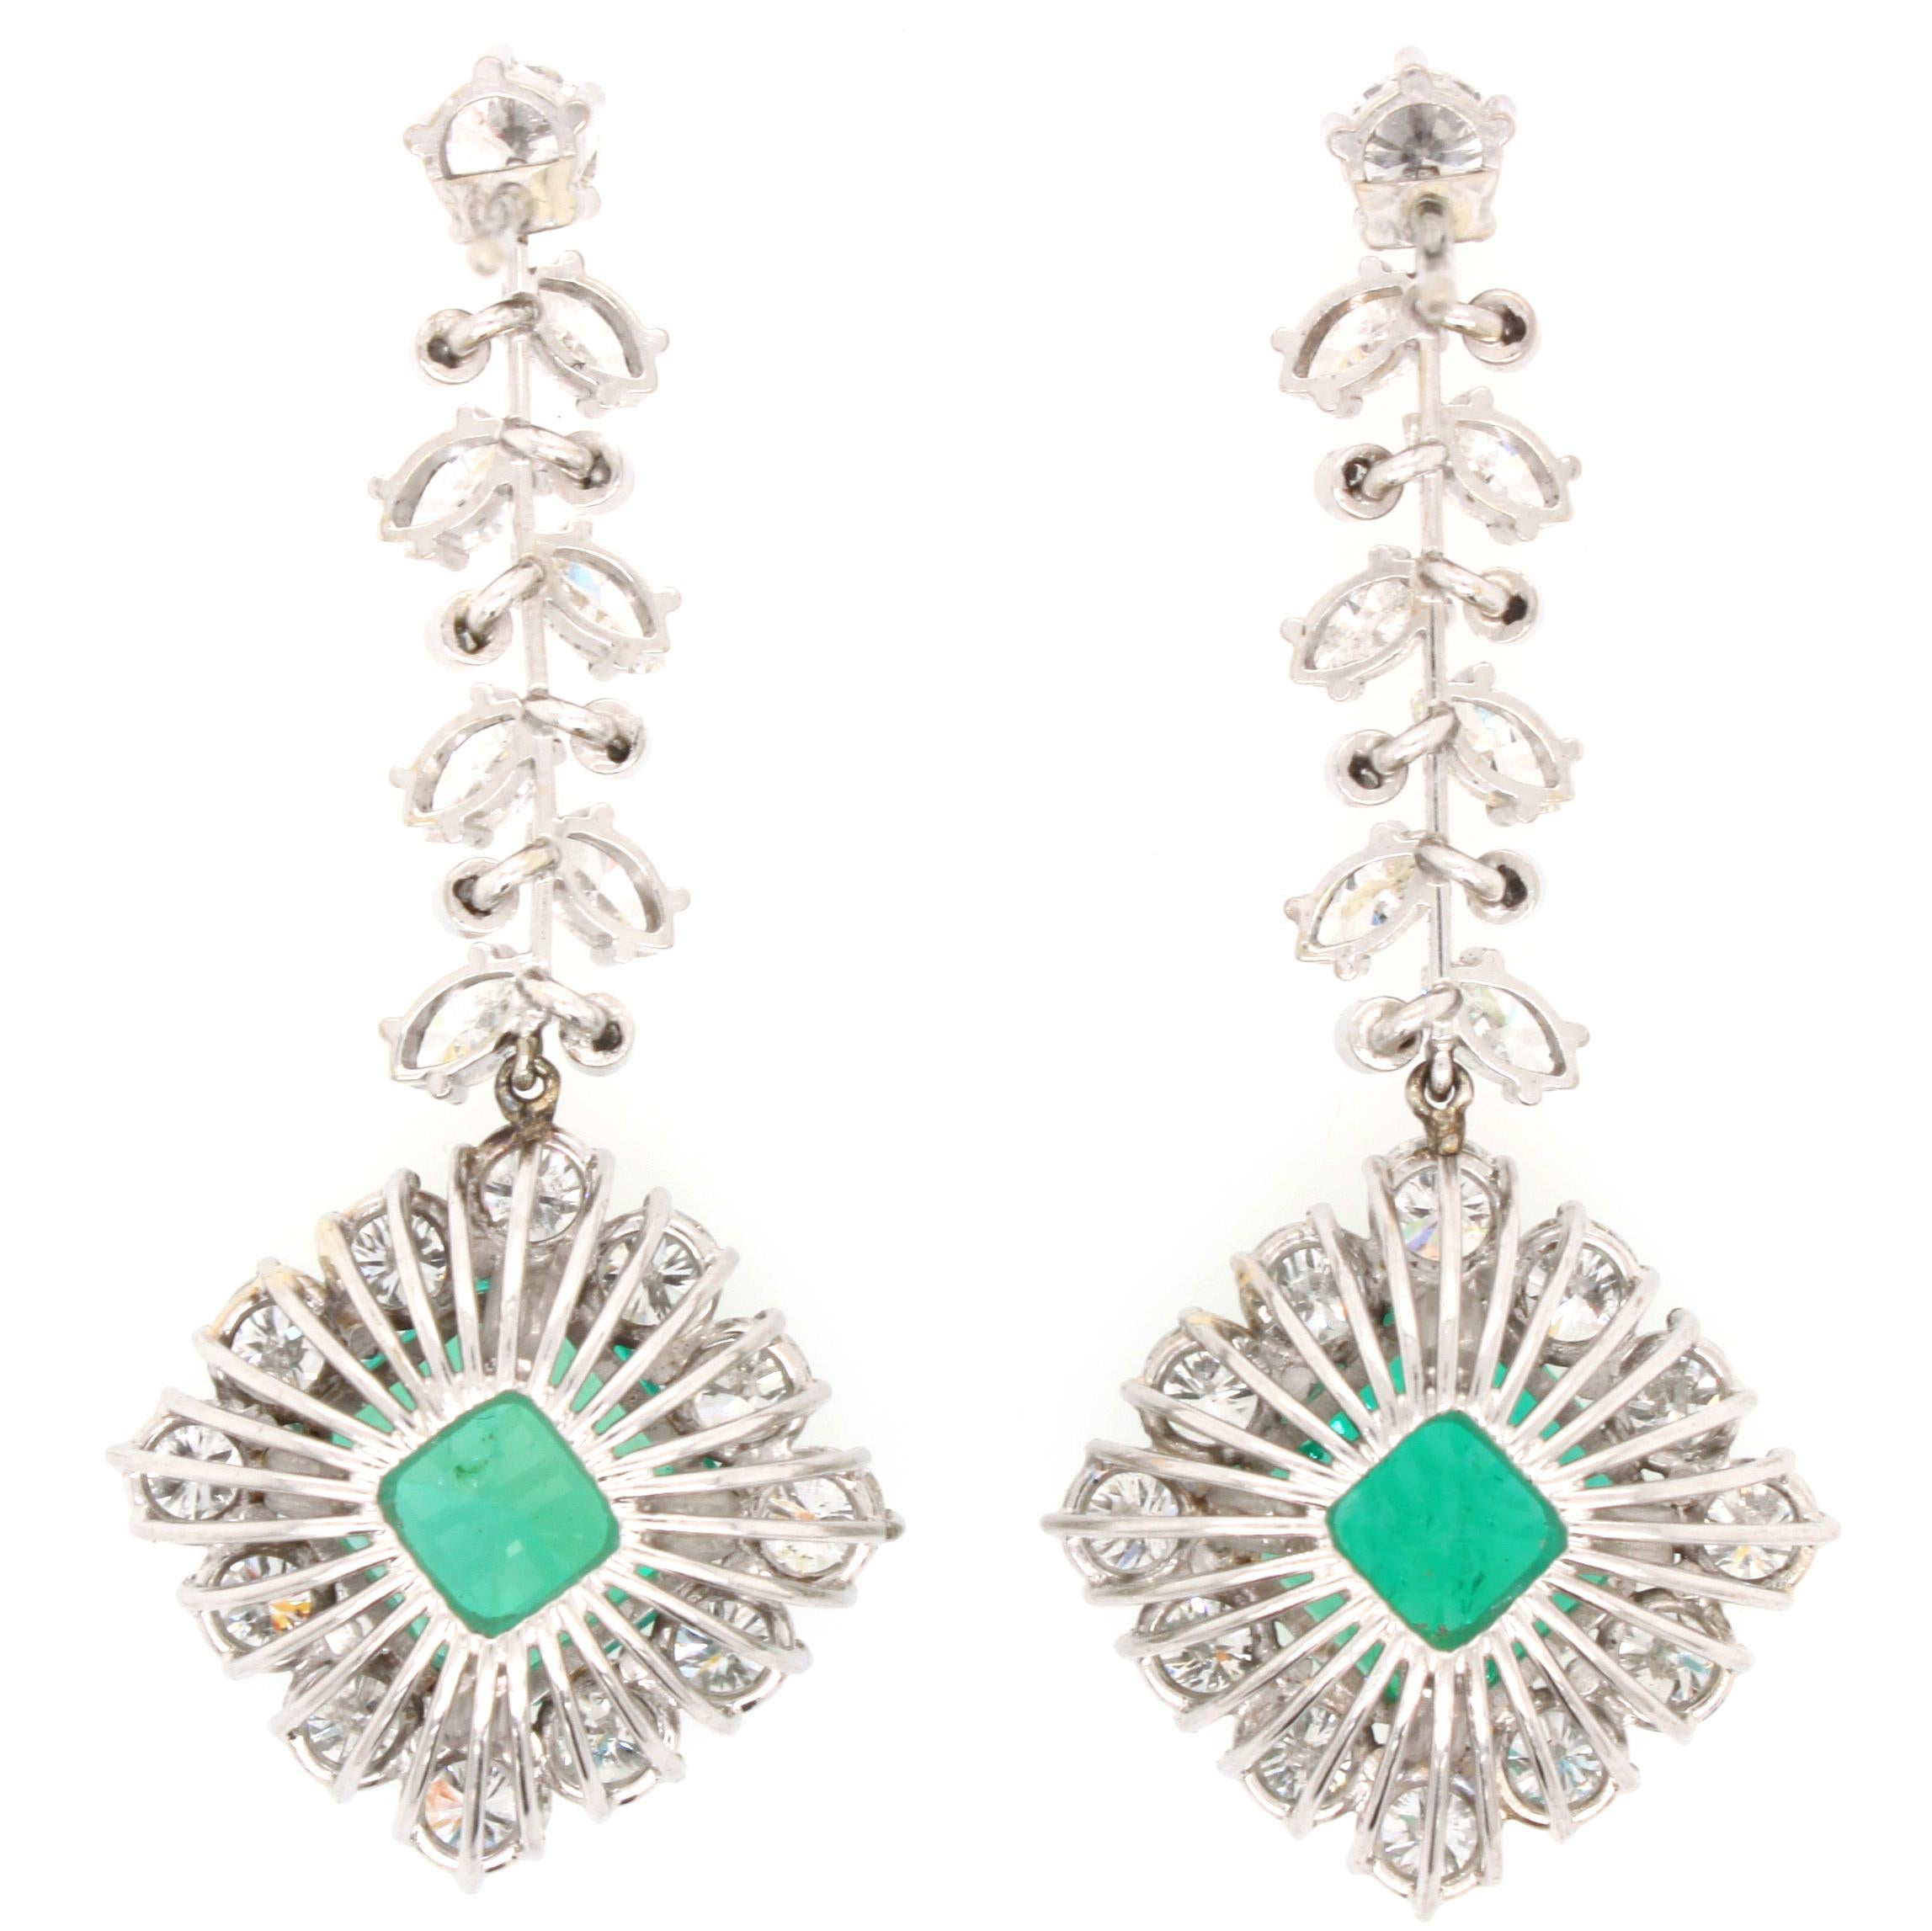 Square Cut Colombian Emerald 'No/Minor Oil' and Diamond Earring